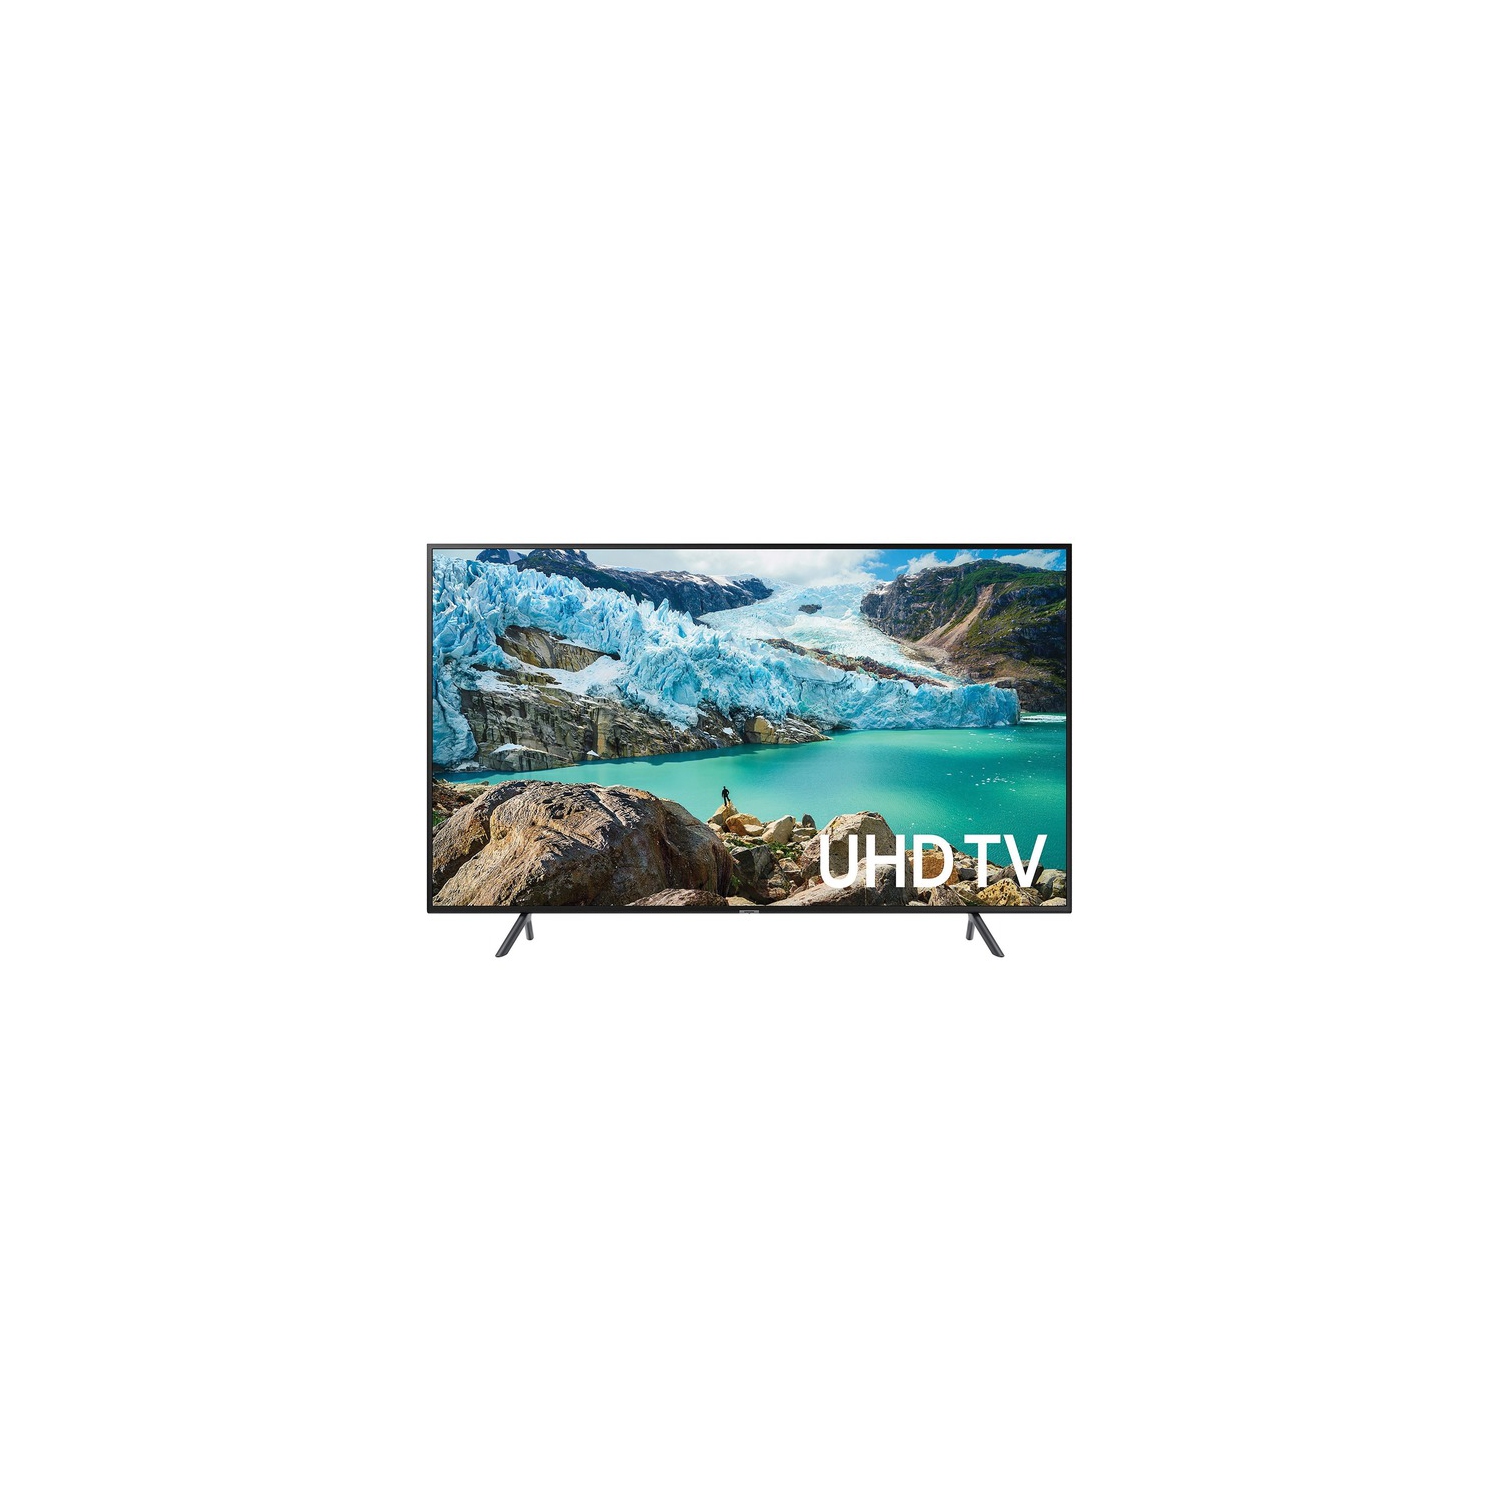 Samsung RU7100 UN55RU7100F 54.6" Smart LED-LCD TV - 4K UHDTV - Charcoal Black